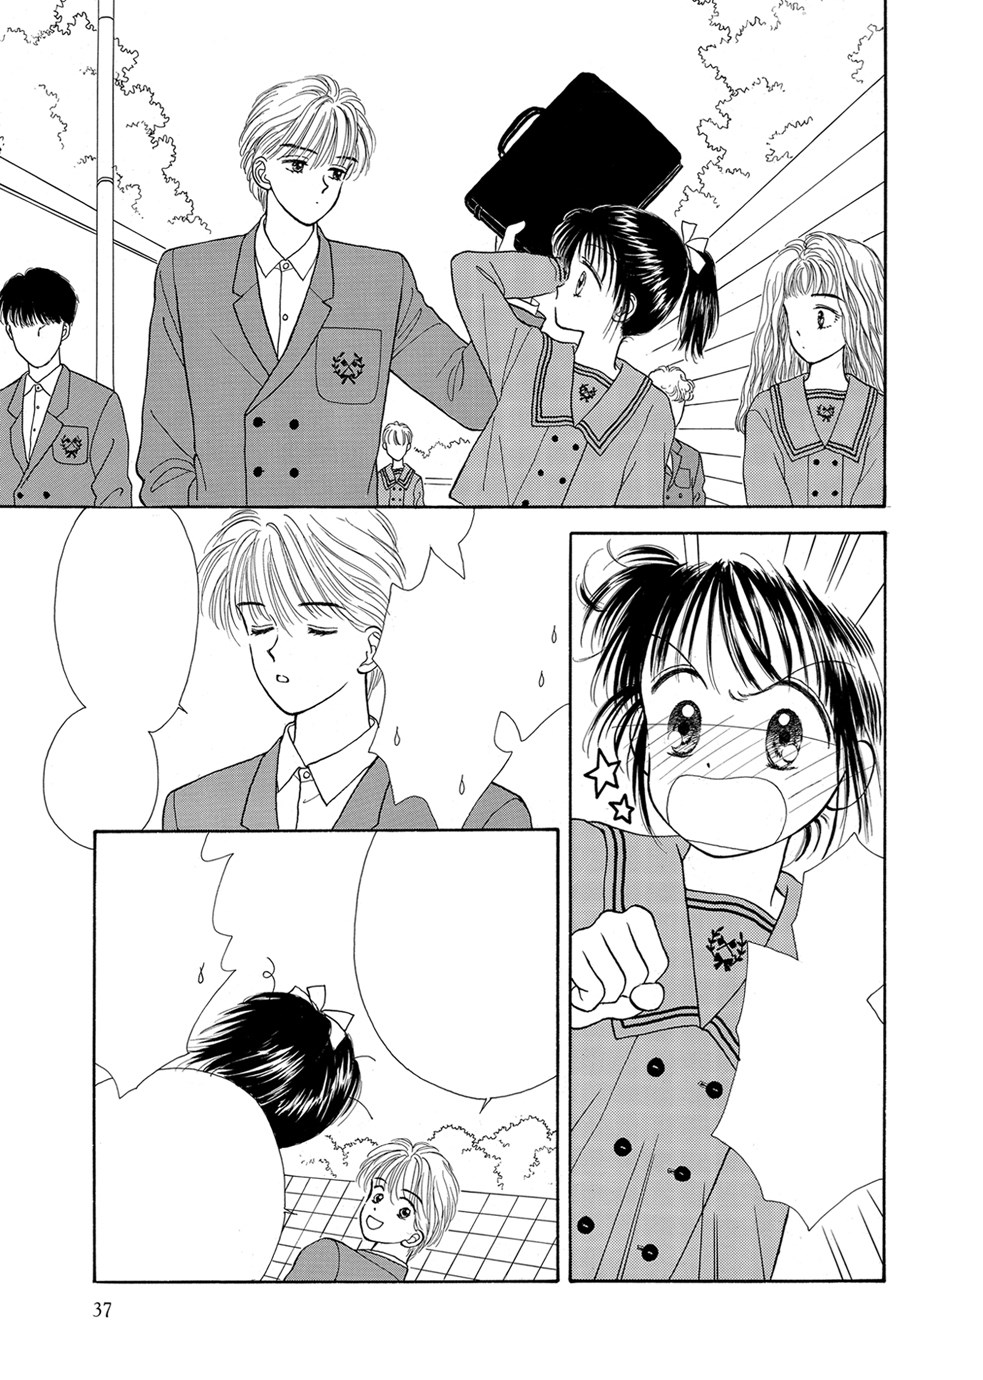 Marmalade Boy: Collector's Edition Manga - Midwest Manga